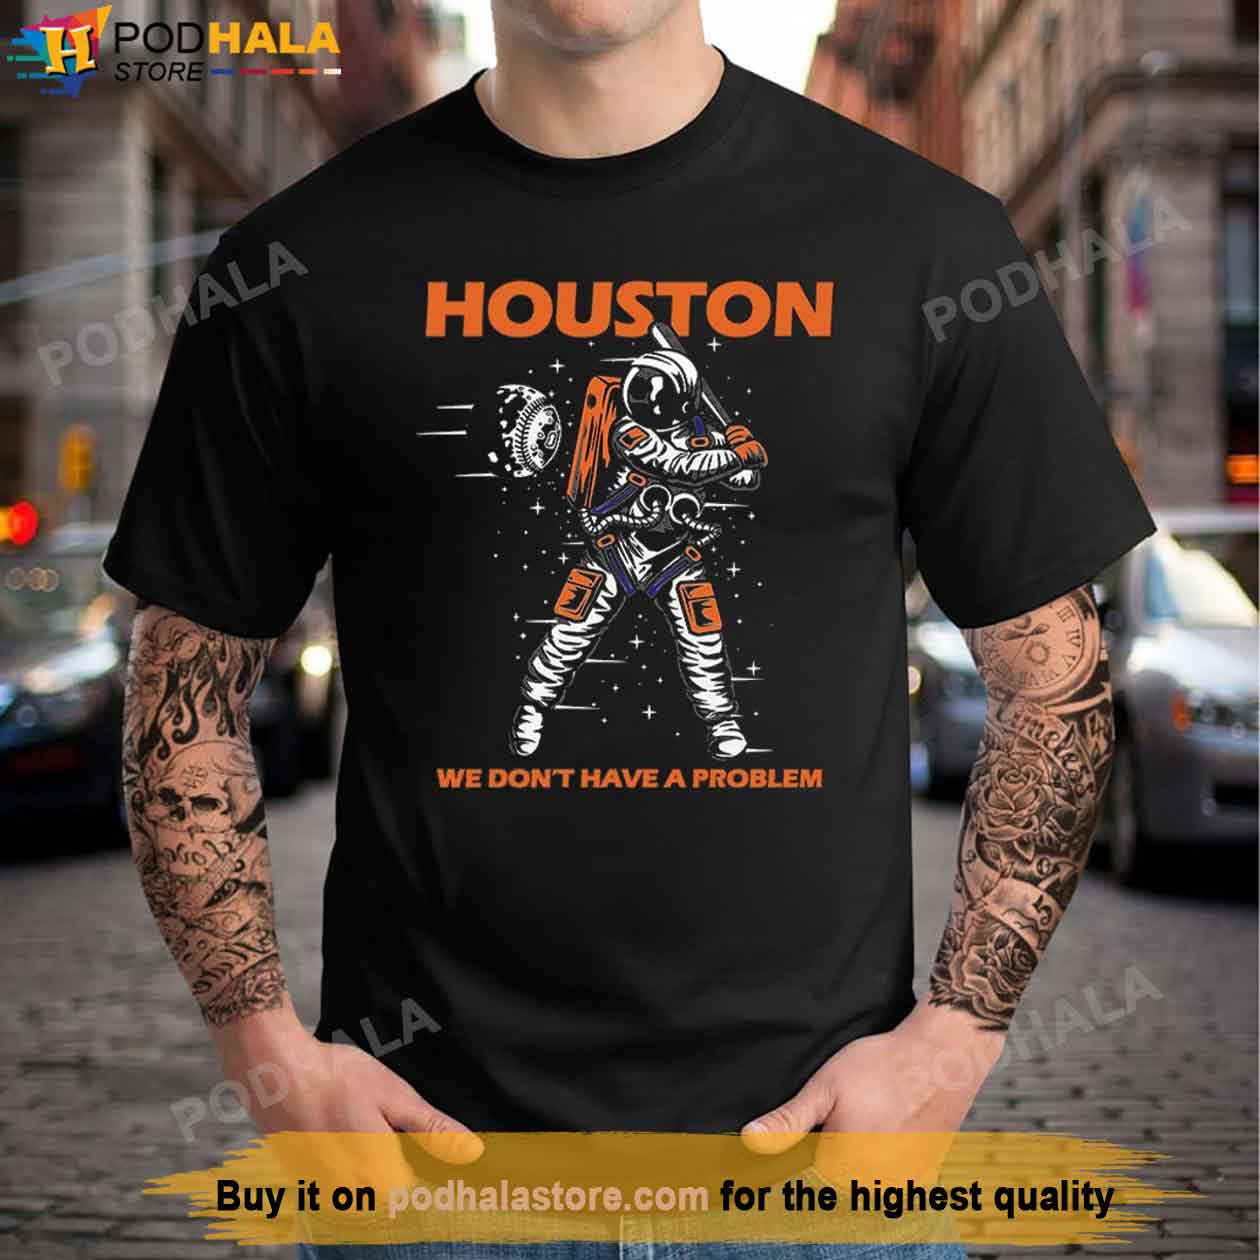 space city houston astros jersey